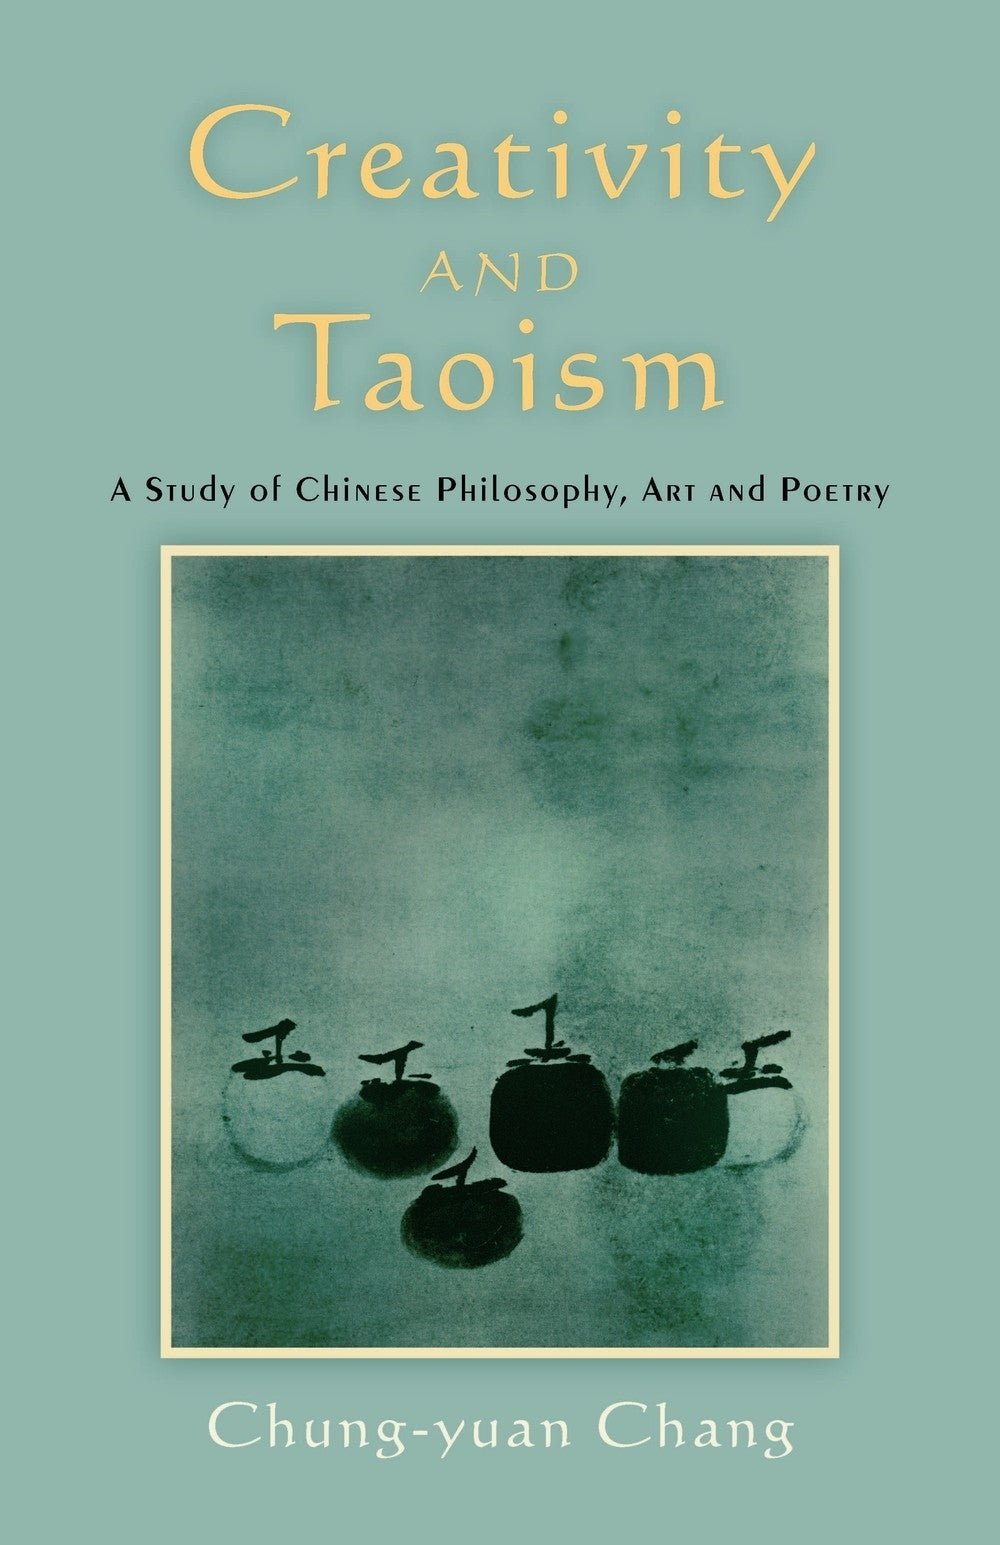 Creativity and Taoism by Chung-yuan Chang